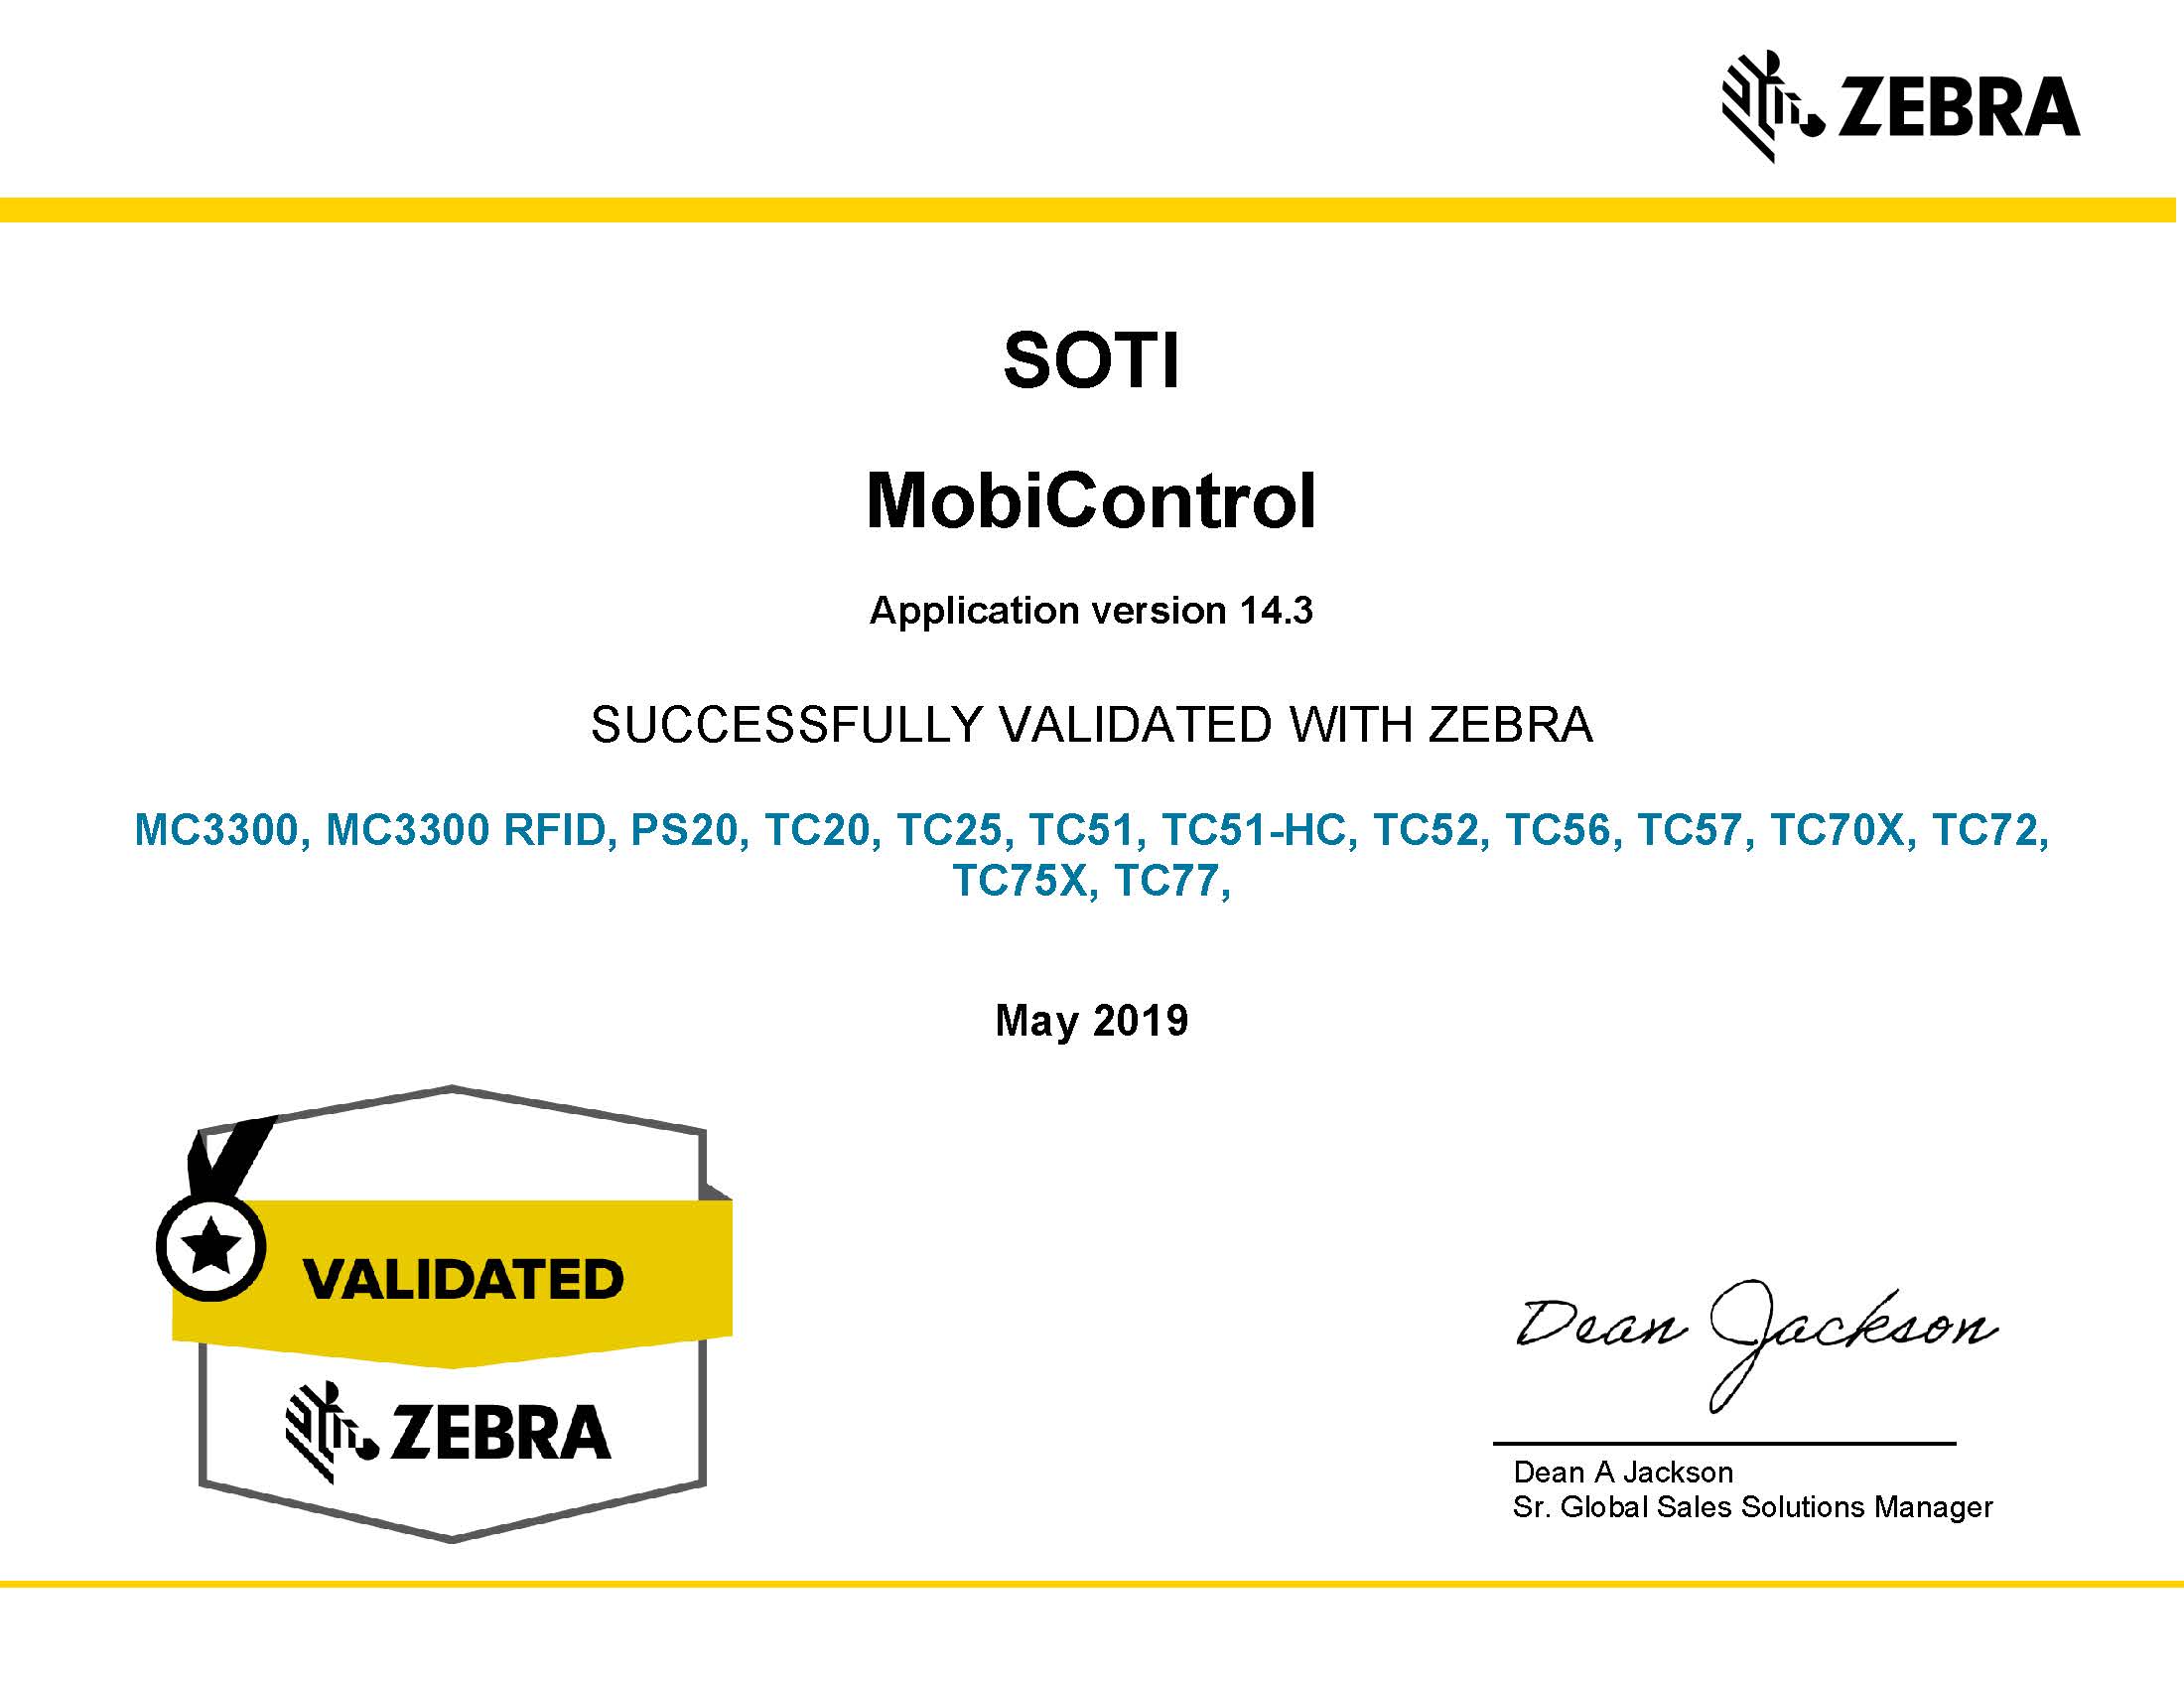 SOTI MobiControl v14.3 Zebra Solution Validation Certificate